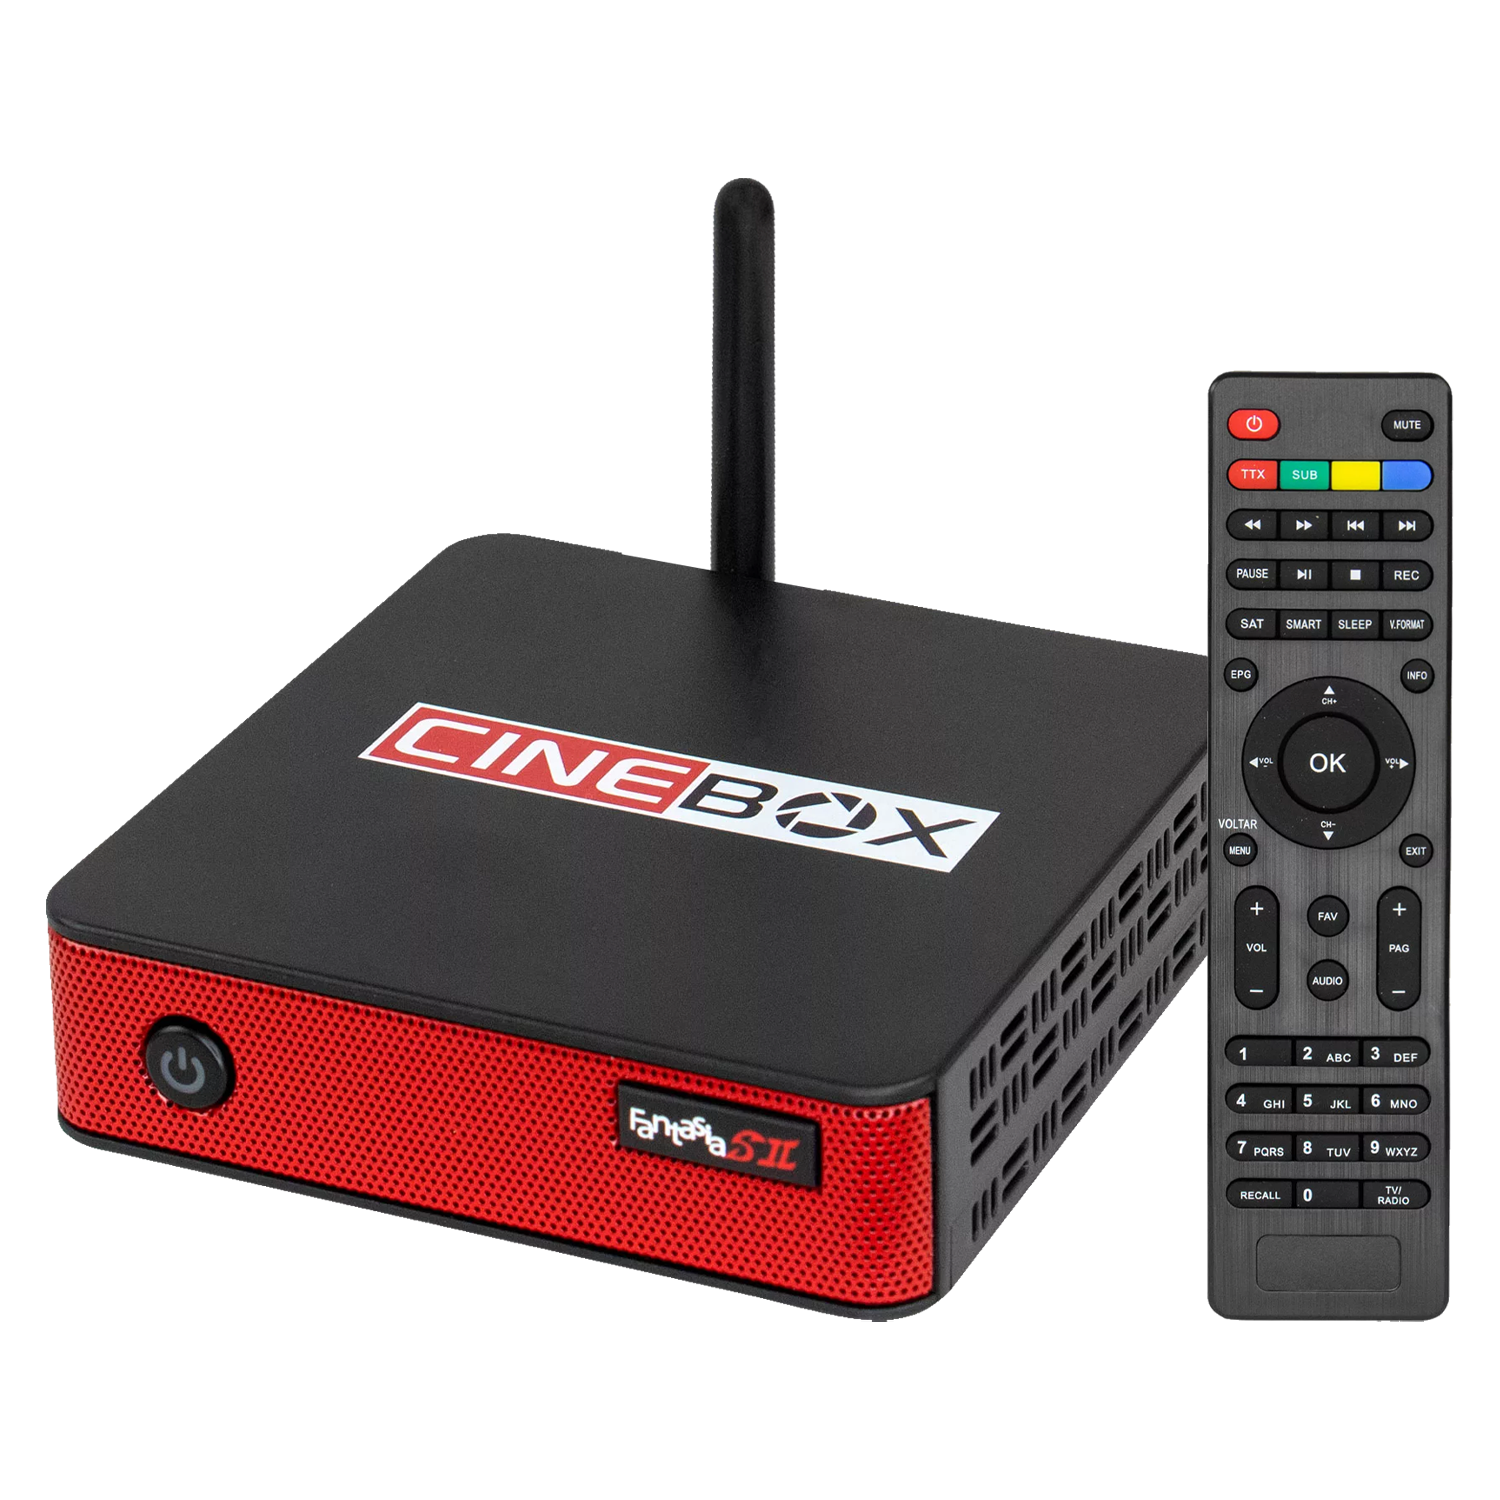 Receptor Cinebox Fantasia Z II Full HD Wi-Fi - Preto